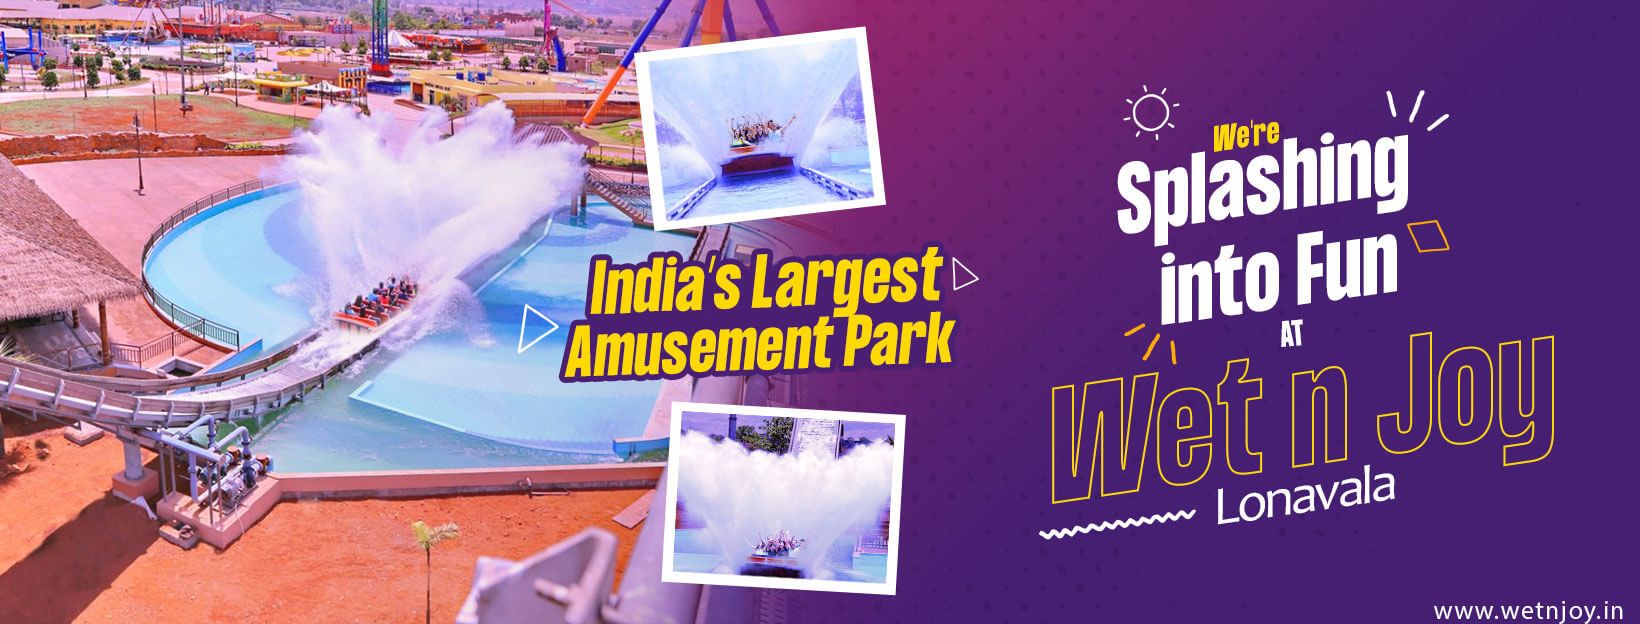 Splashing into Fun Wet n Joy Lonavala – India’s Largest Amusement Park